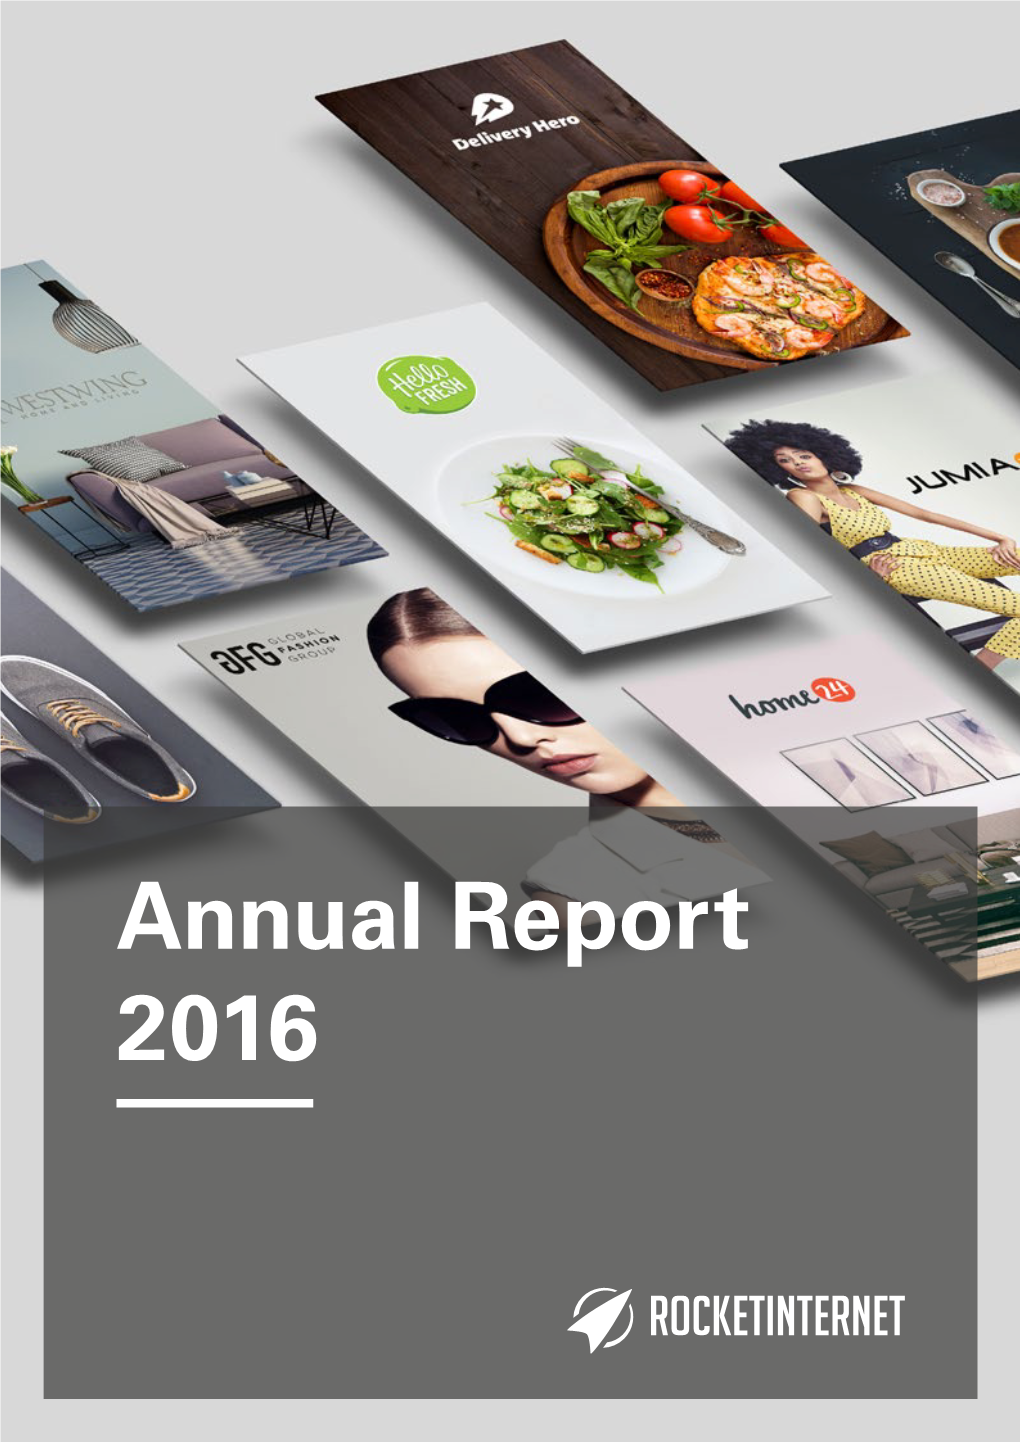 Annual Report 2016 Key Figures